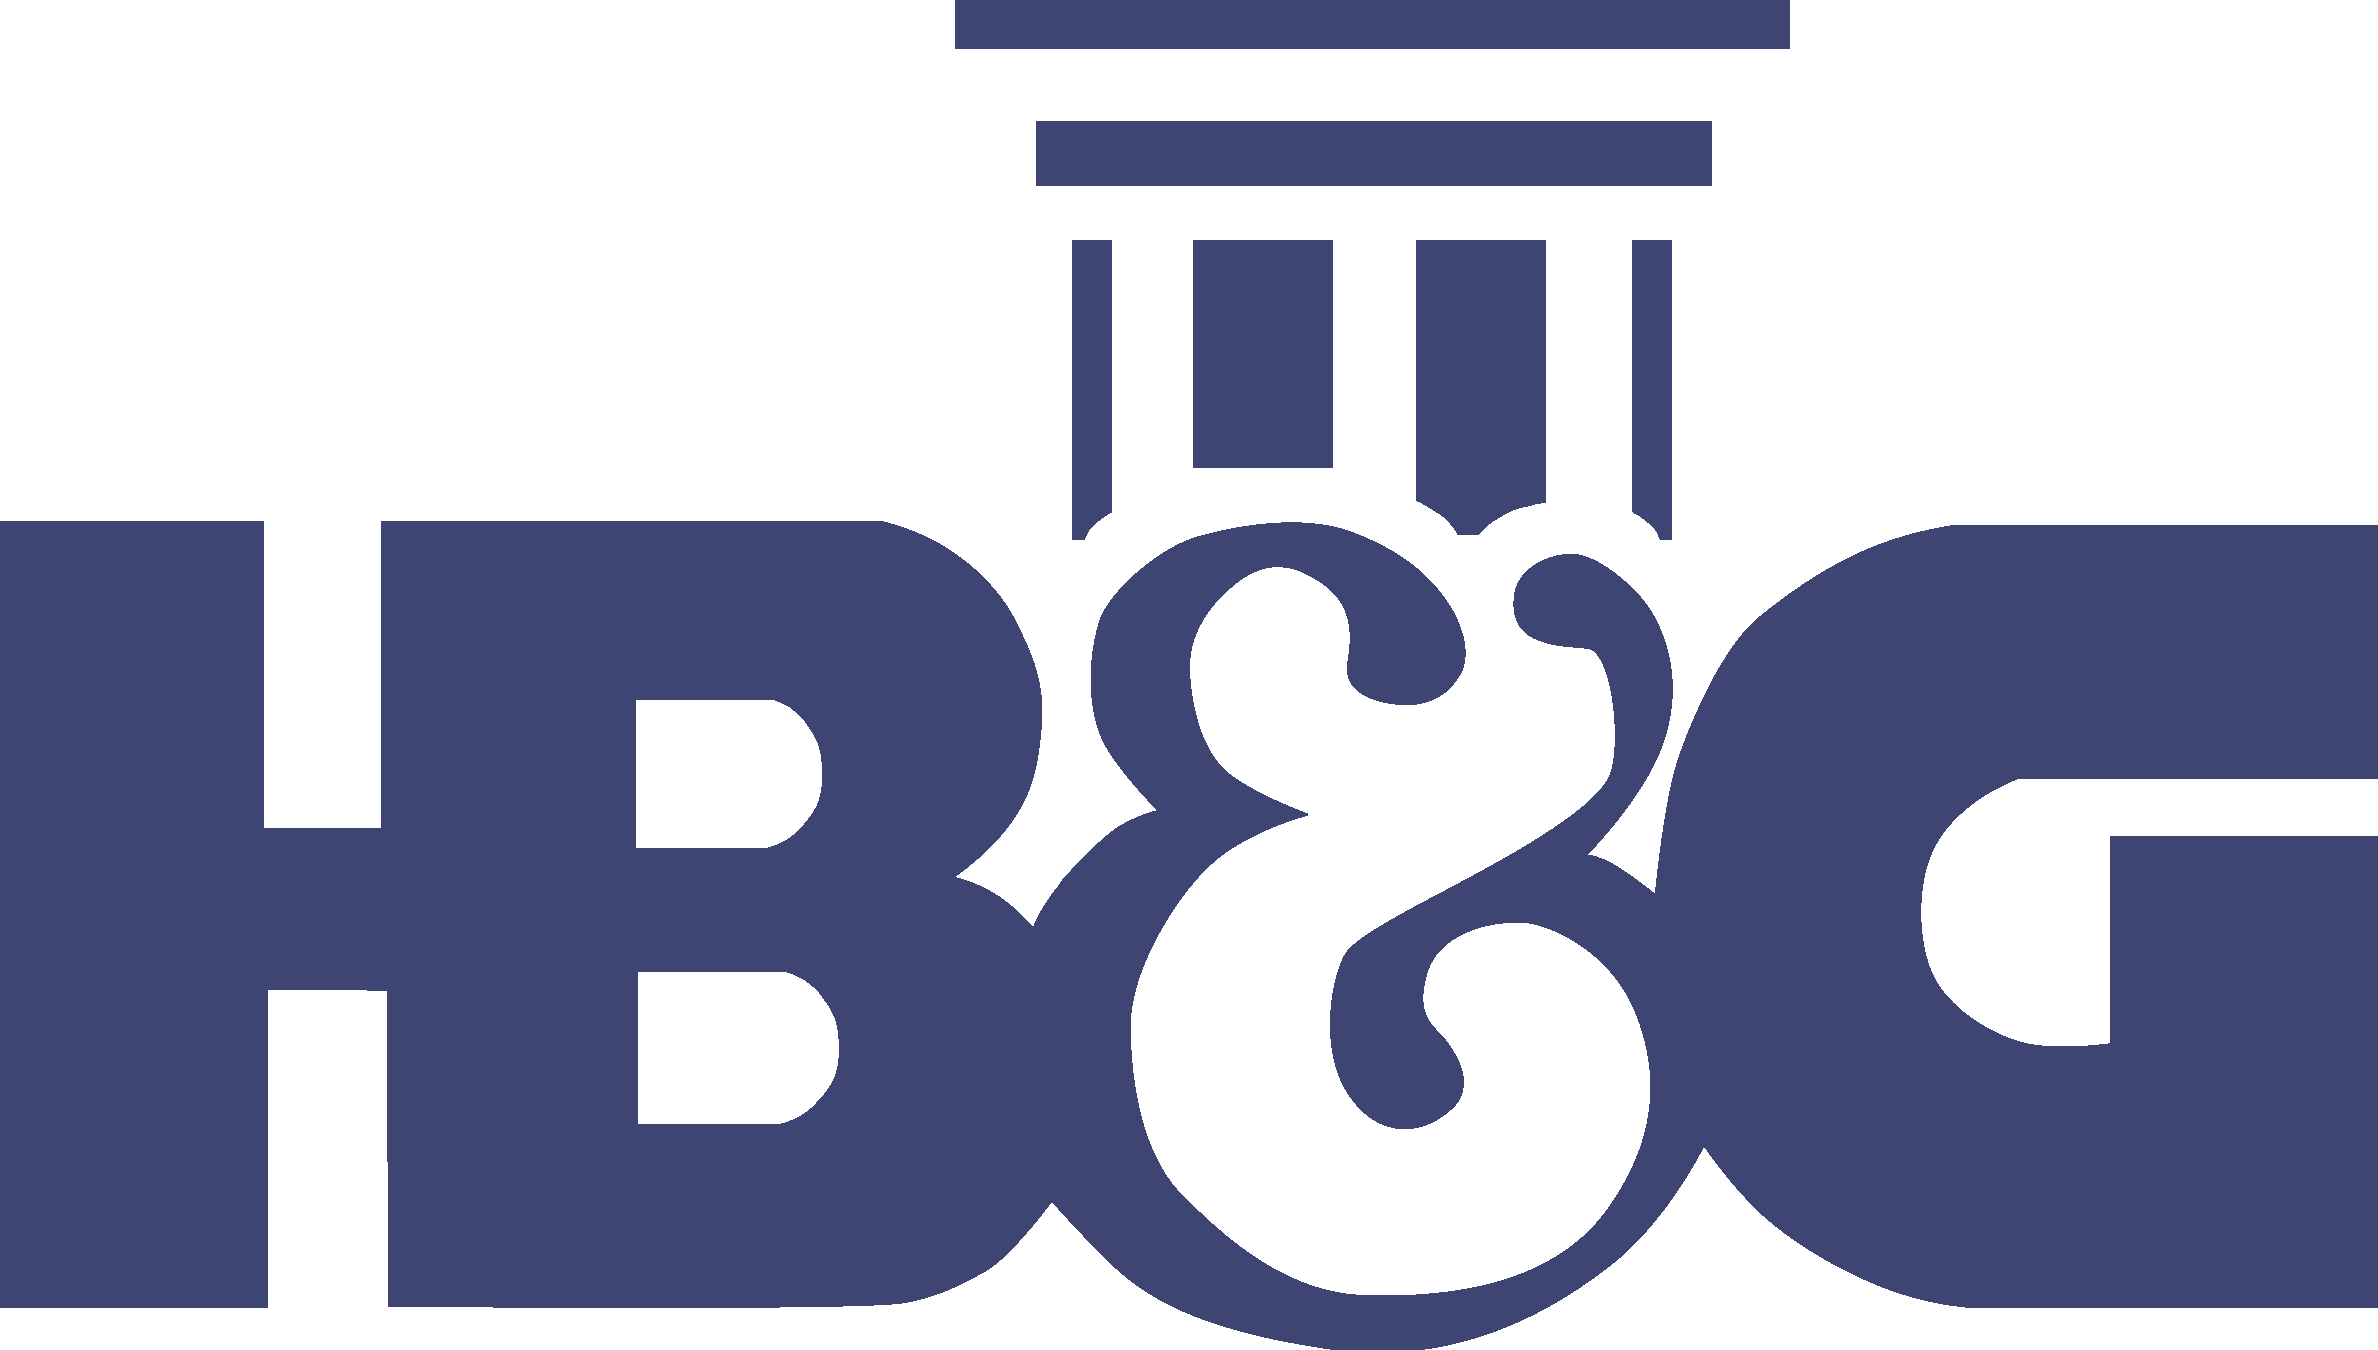 hb-g-logo